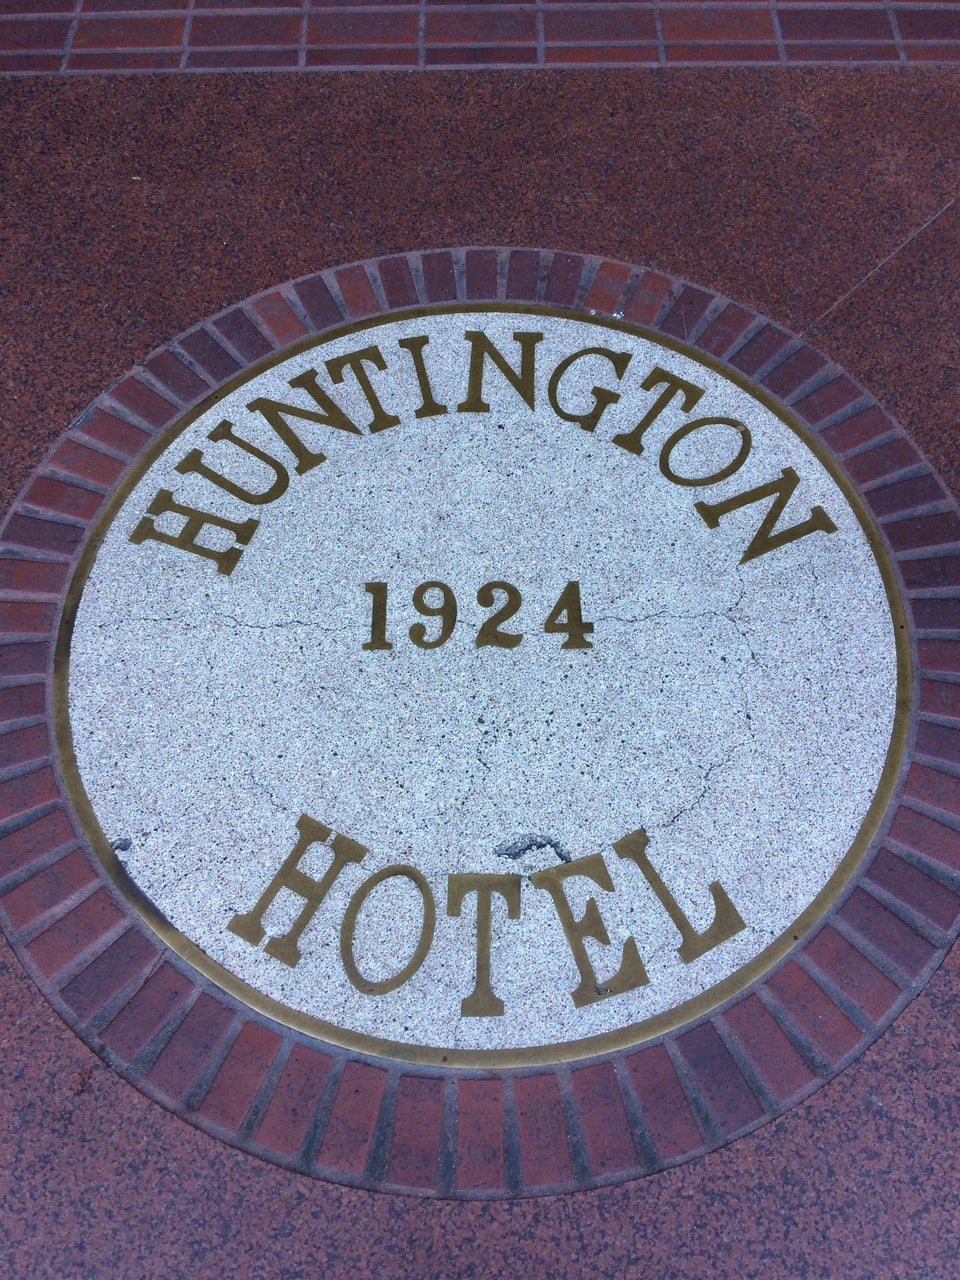 Photo of Huntington Hotel